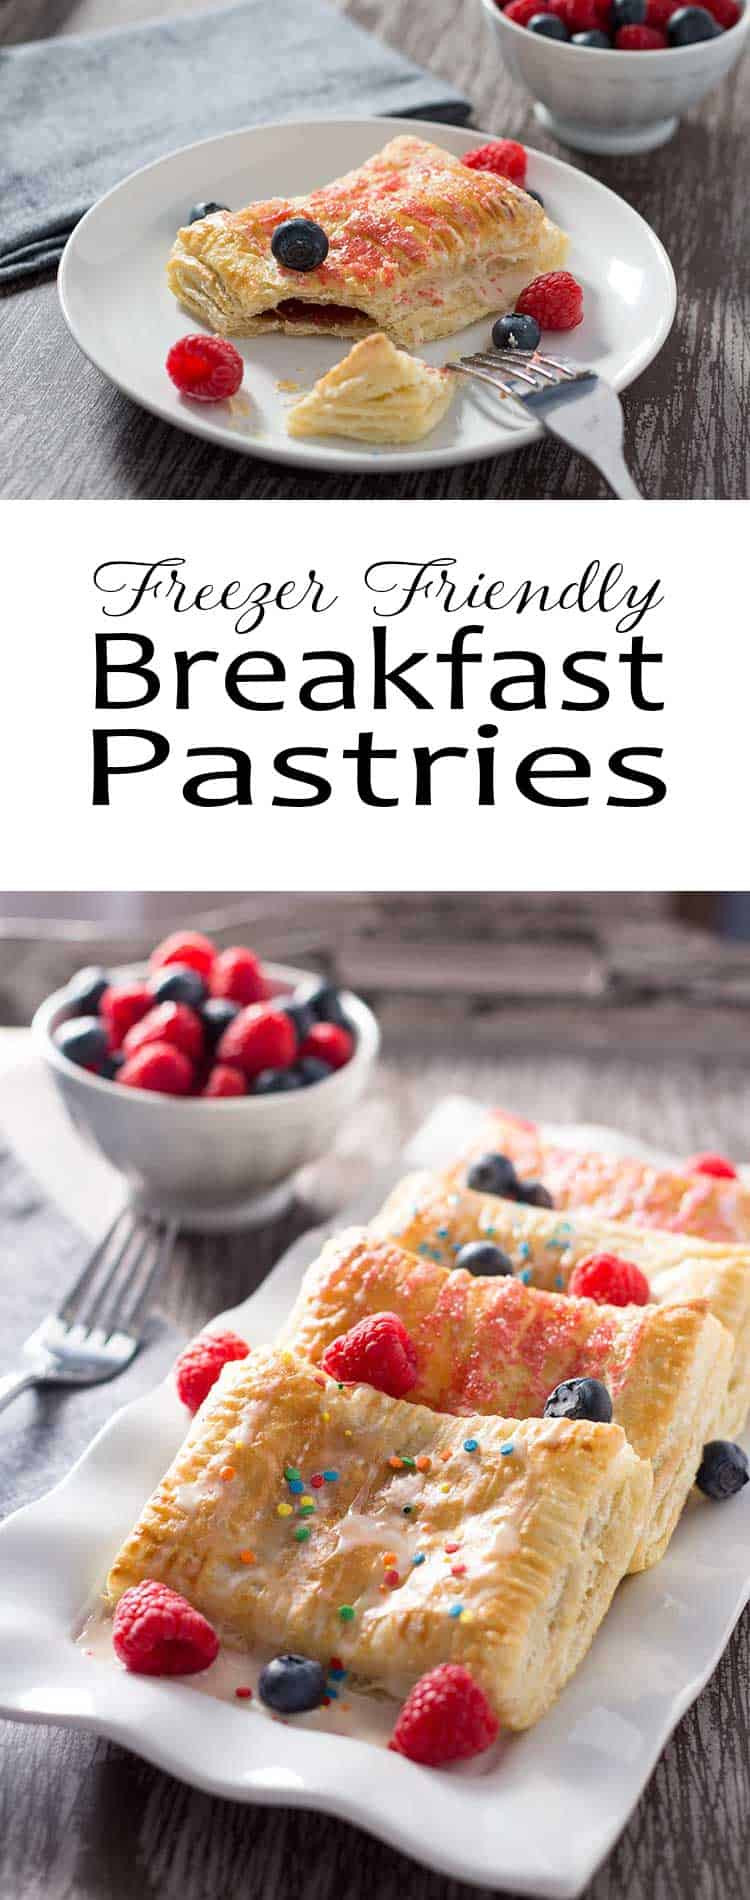 Easy Breakfast Pastry Recipes
 Easy Breakfast Pastries